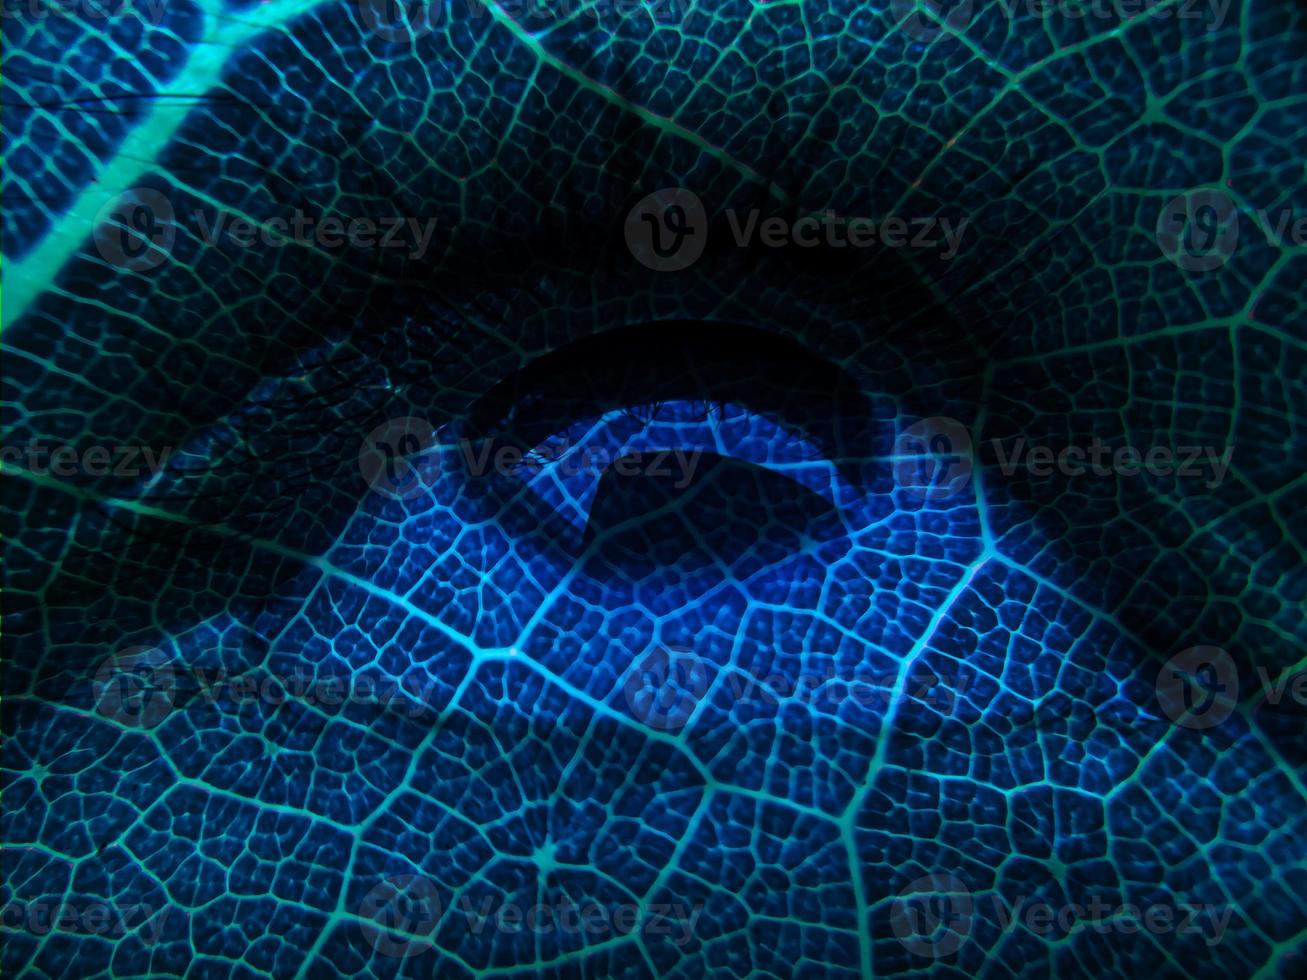 Leaf vein on human's eye photo